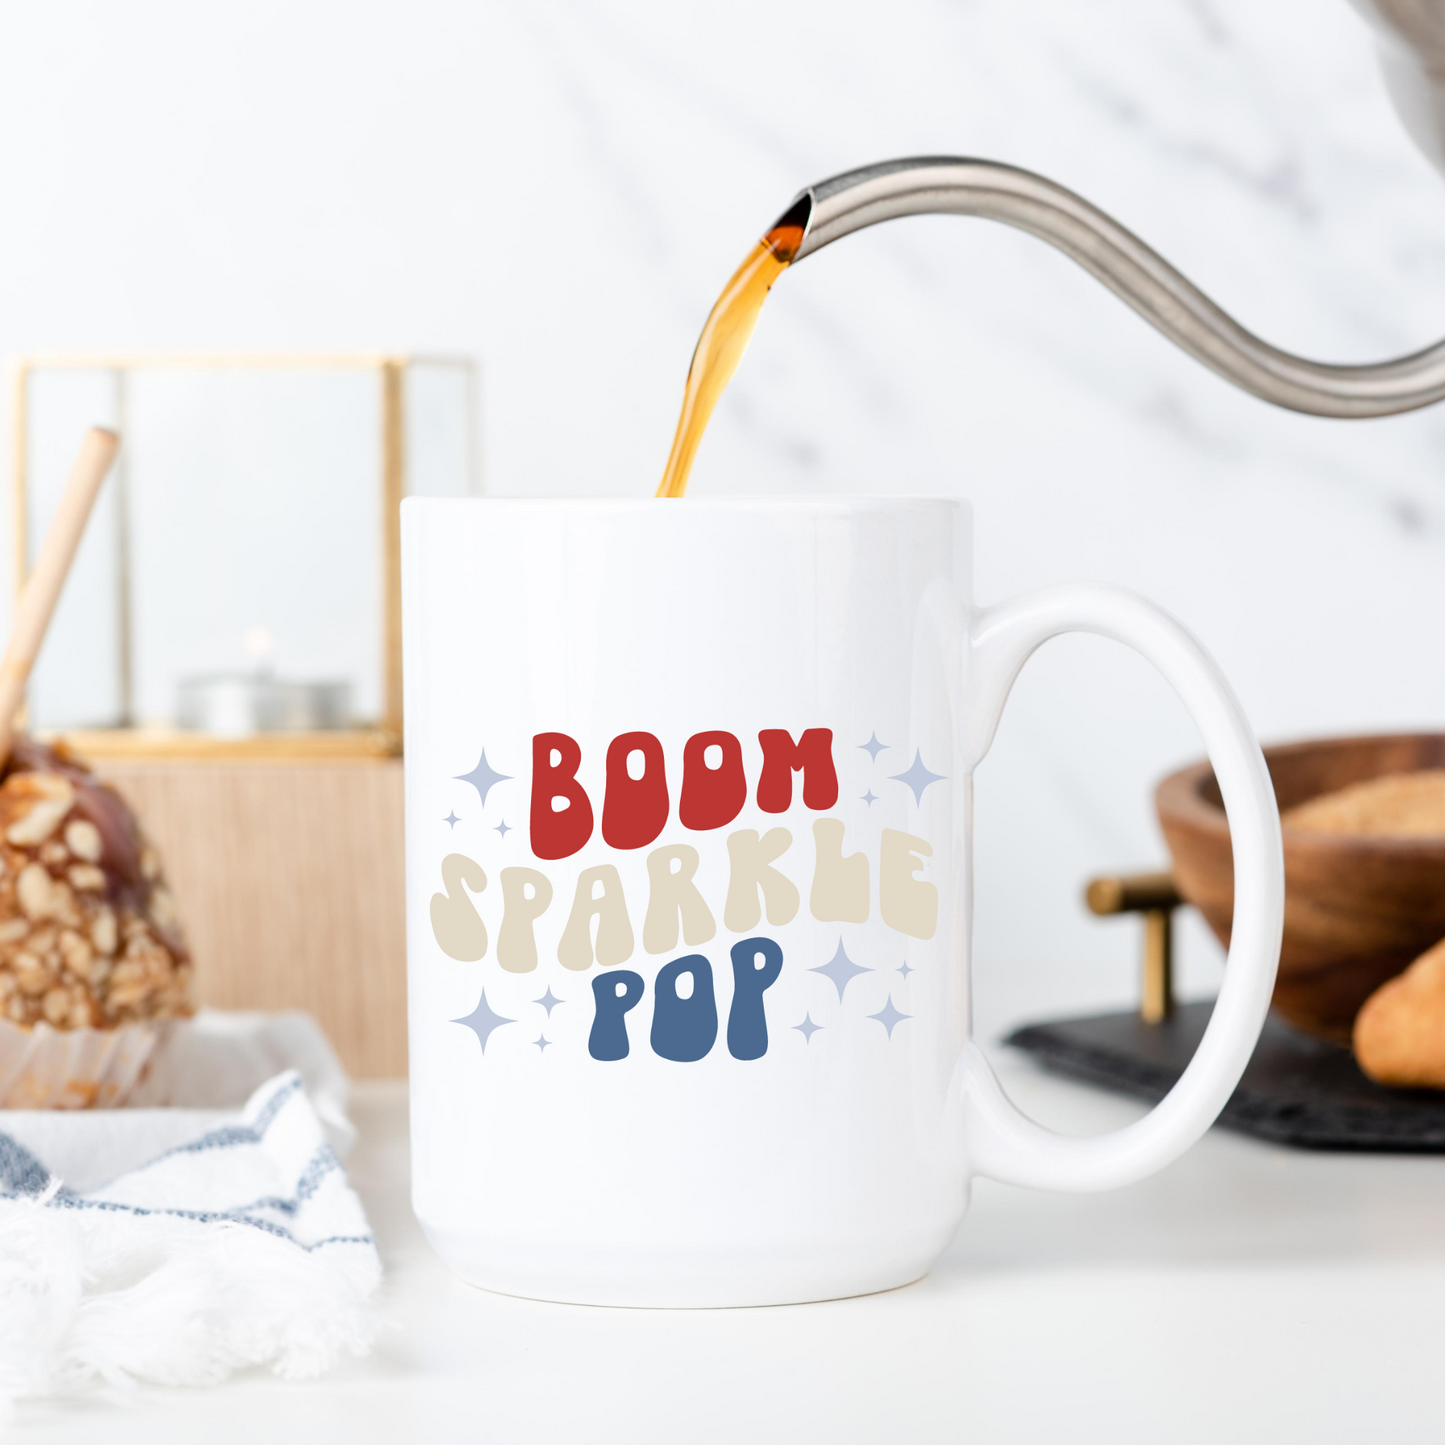 Boom Sparkle Pop Mug or Tumbler